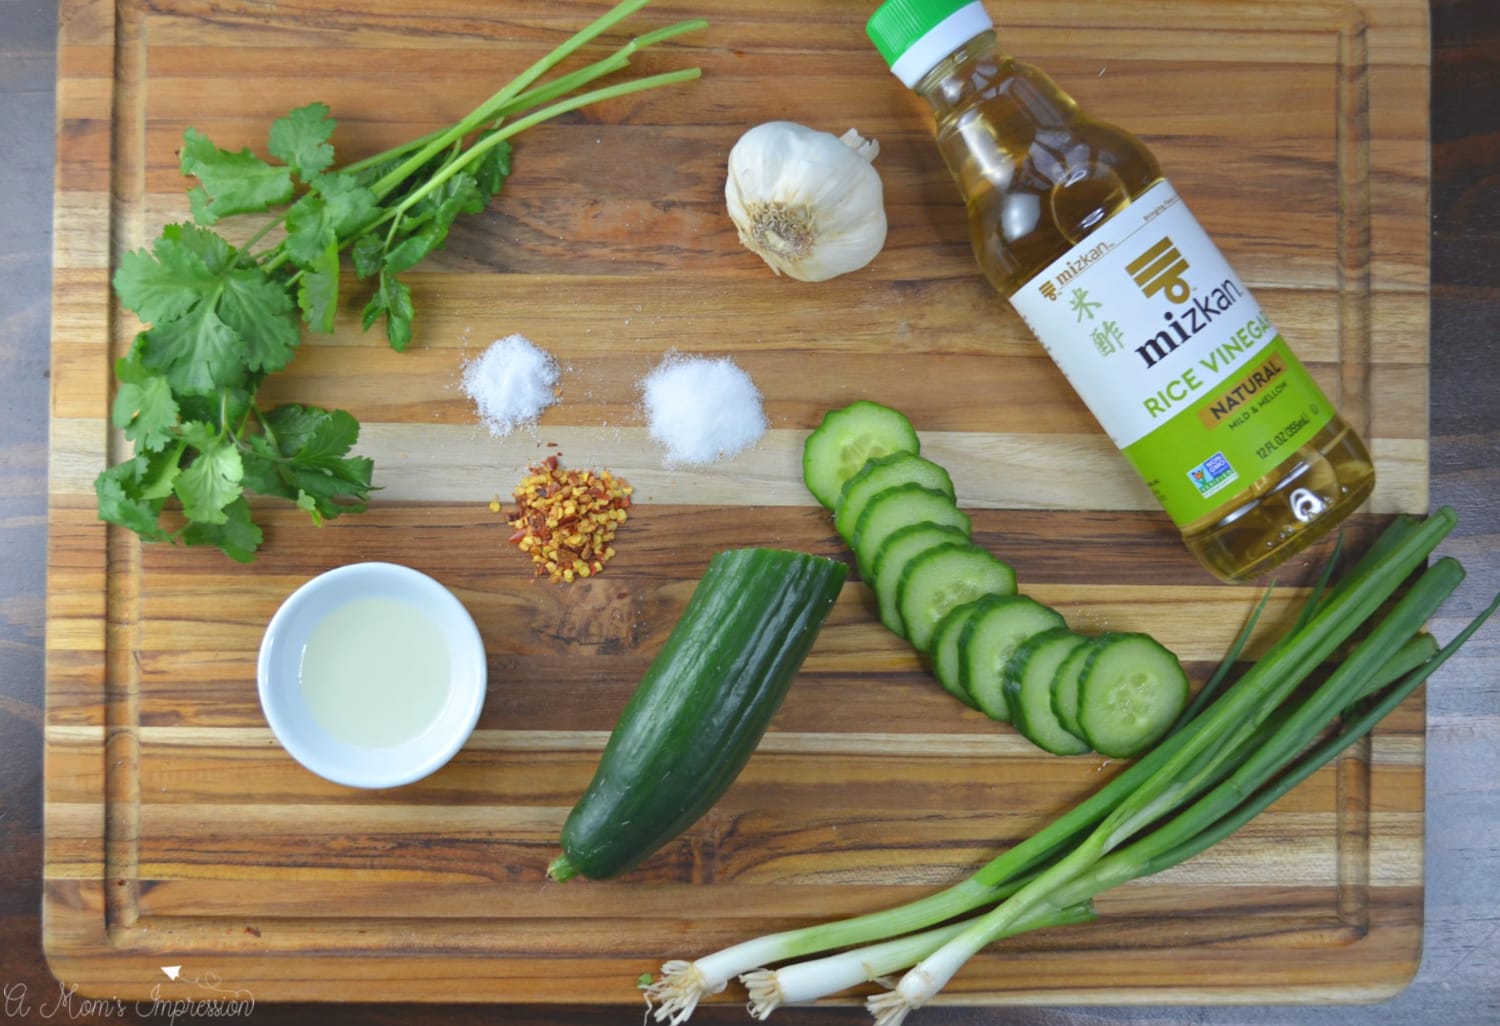 Mizkan Rice Vinegar is great for Asian Cucumber Salads